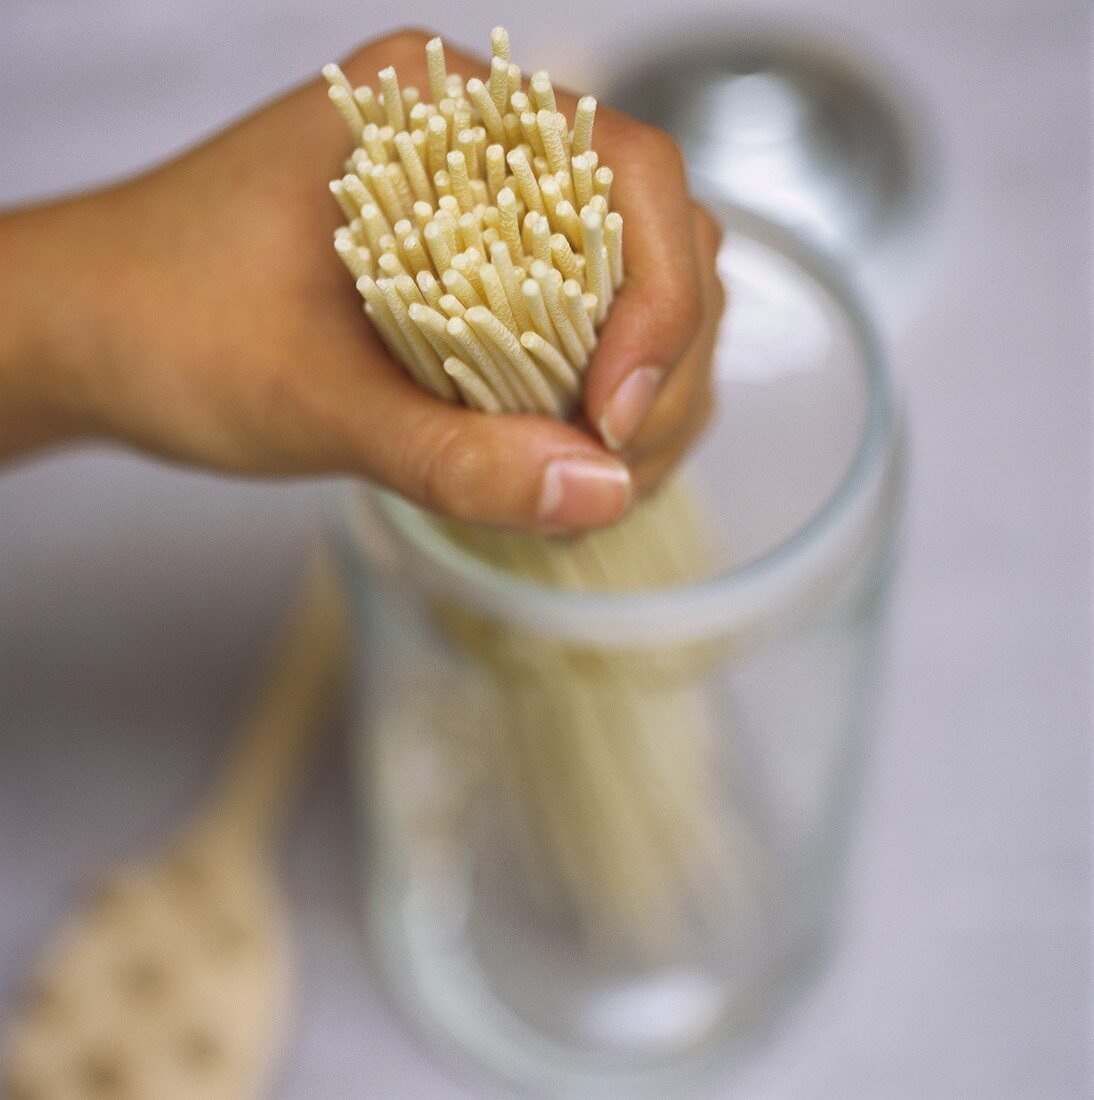 Hands putting pasta into a storage jar